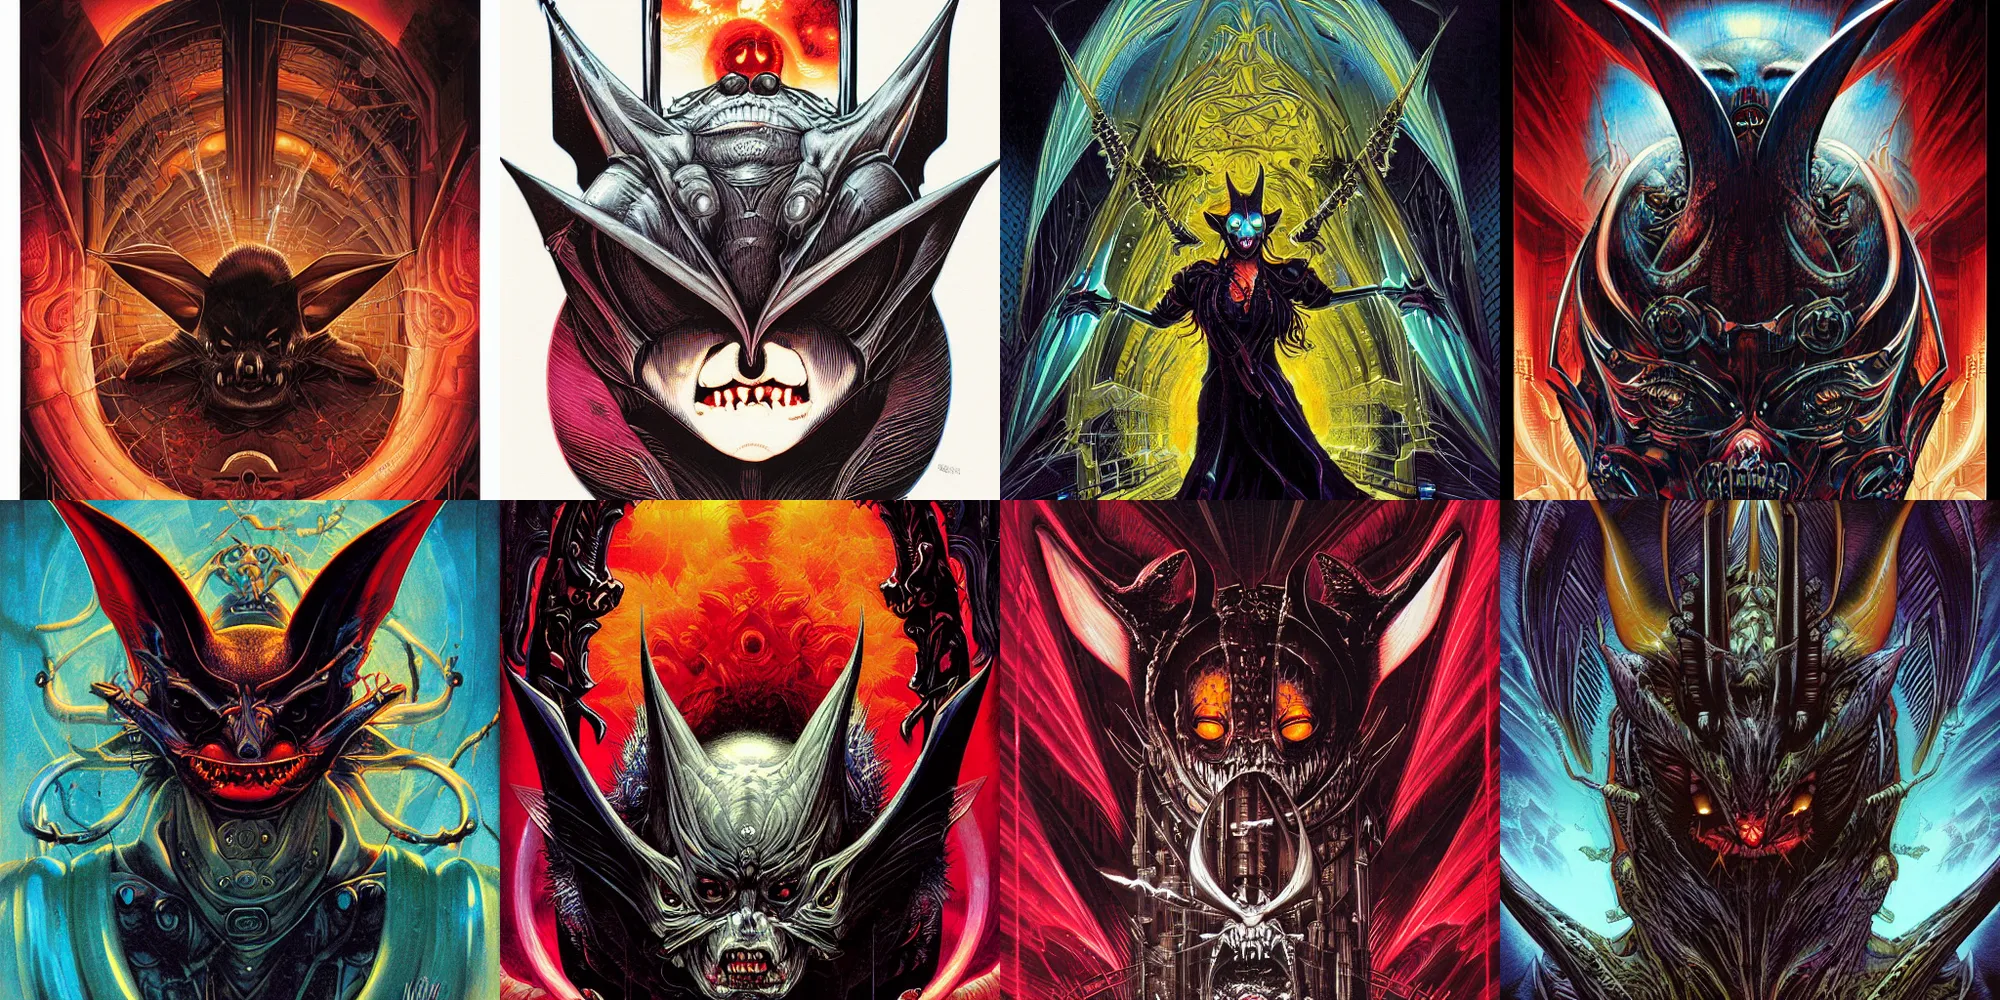 Prompt: portrait vampire bat from hell, symmetrical, cinematic colors, by masamune shirow, dan mumford, karol bak